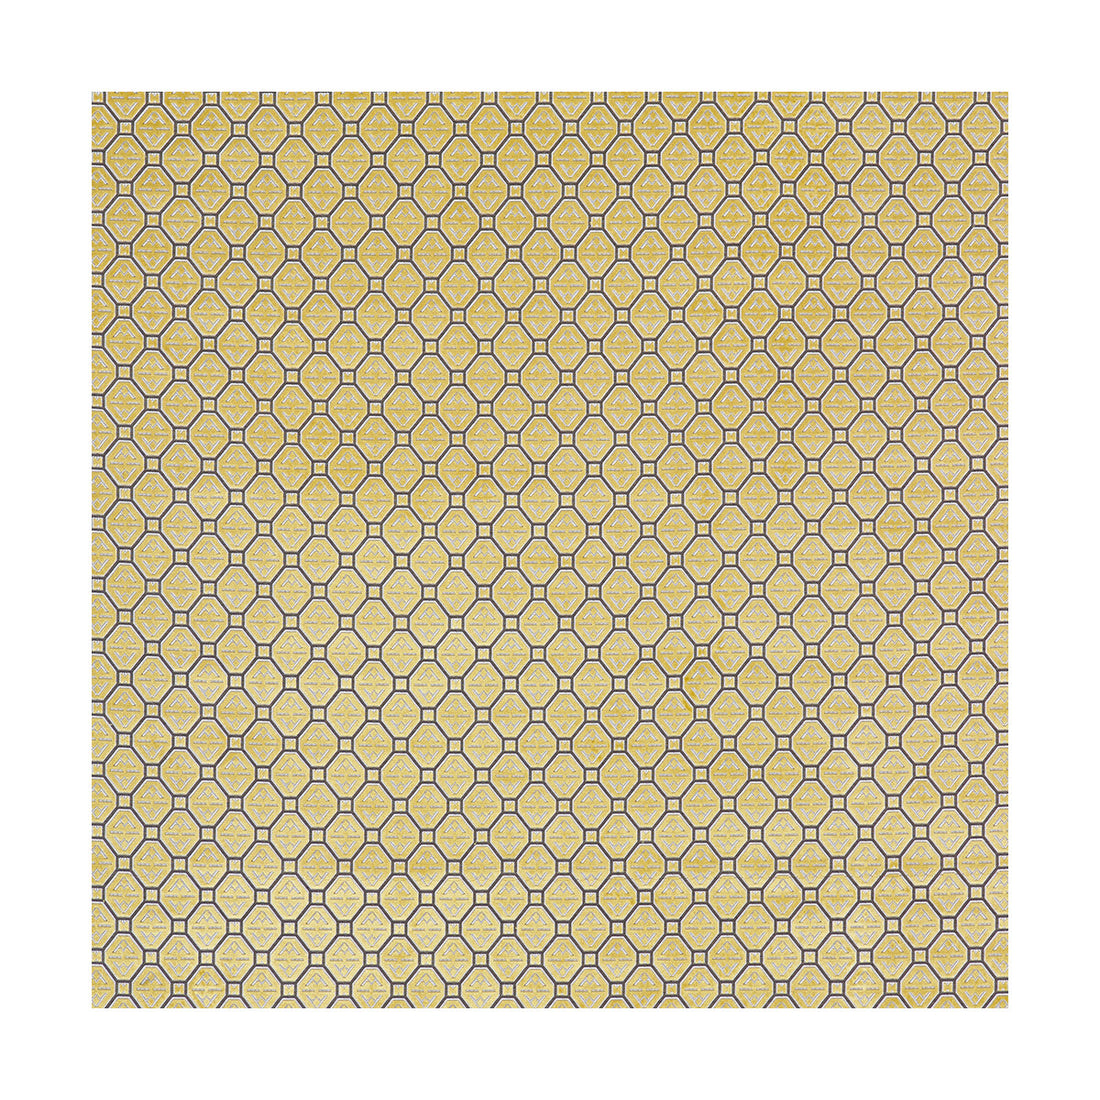 Calabrez fabric in amarillo color - pattern LCT5358A.006.0 - by Gaston y Daniela in the Lorenzo Castillo III collection